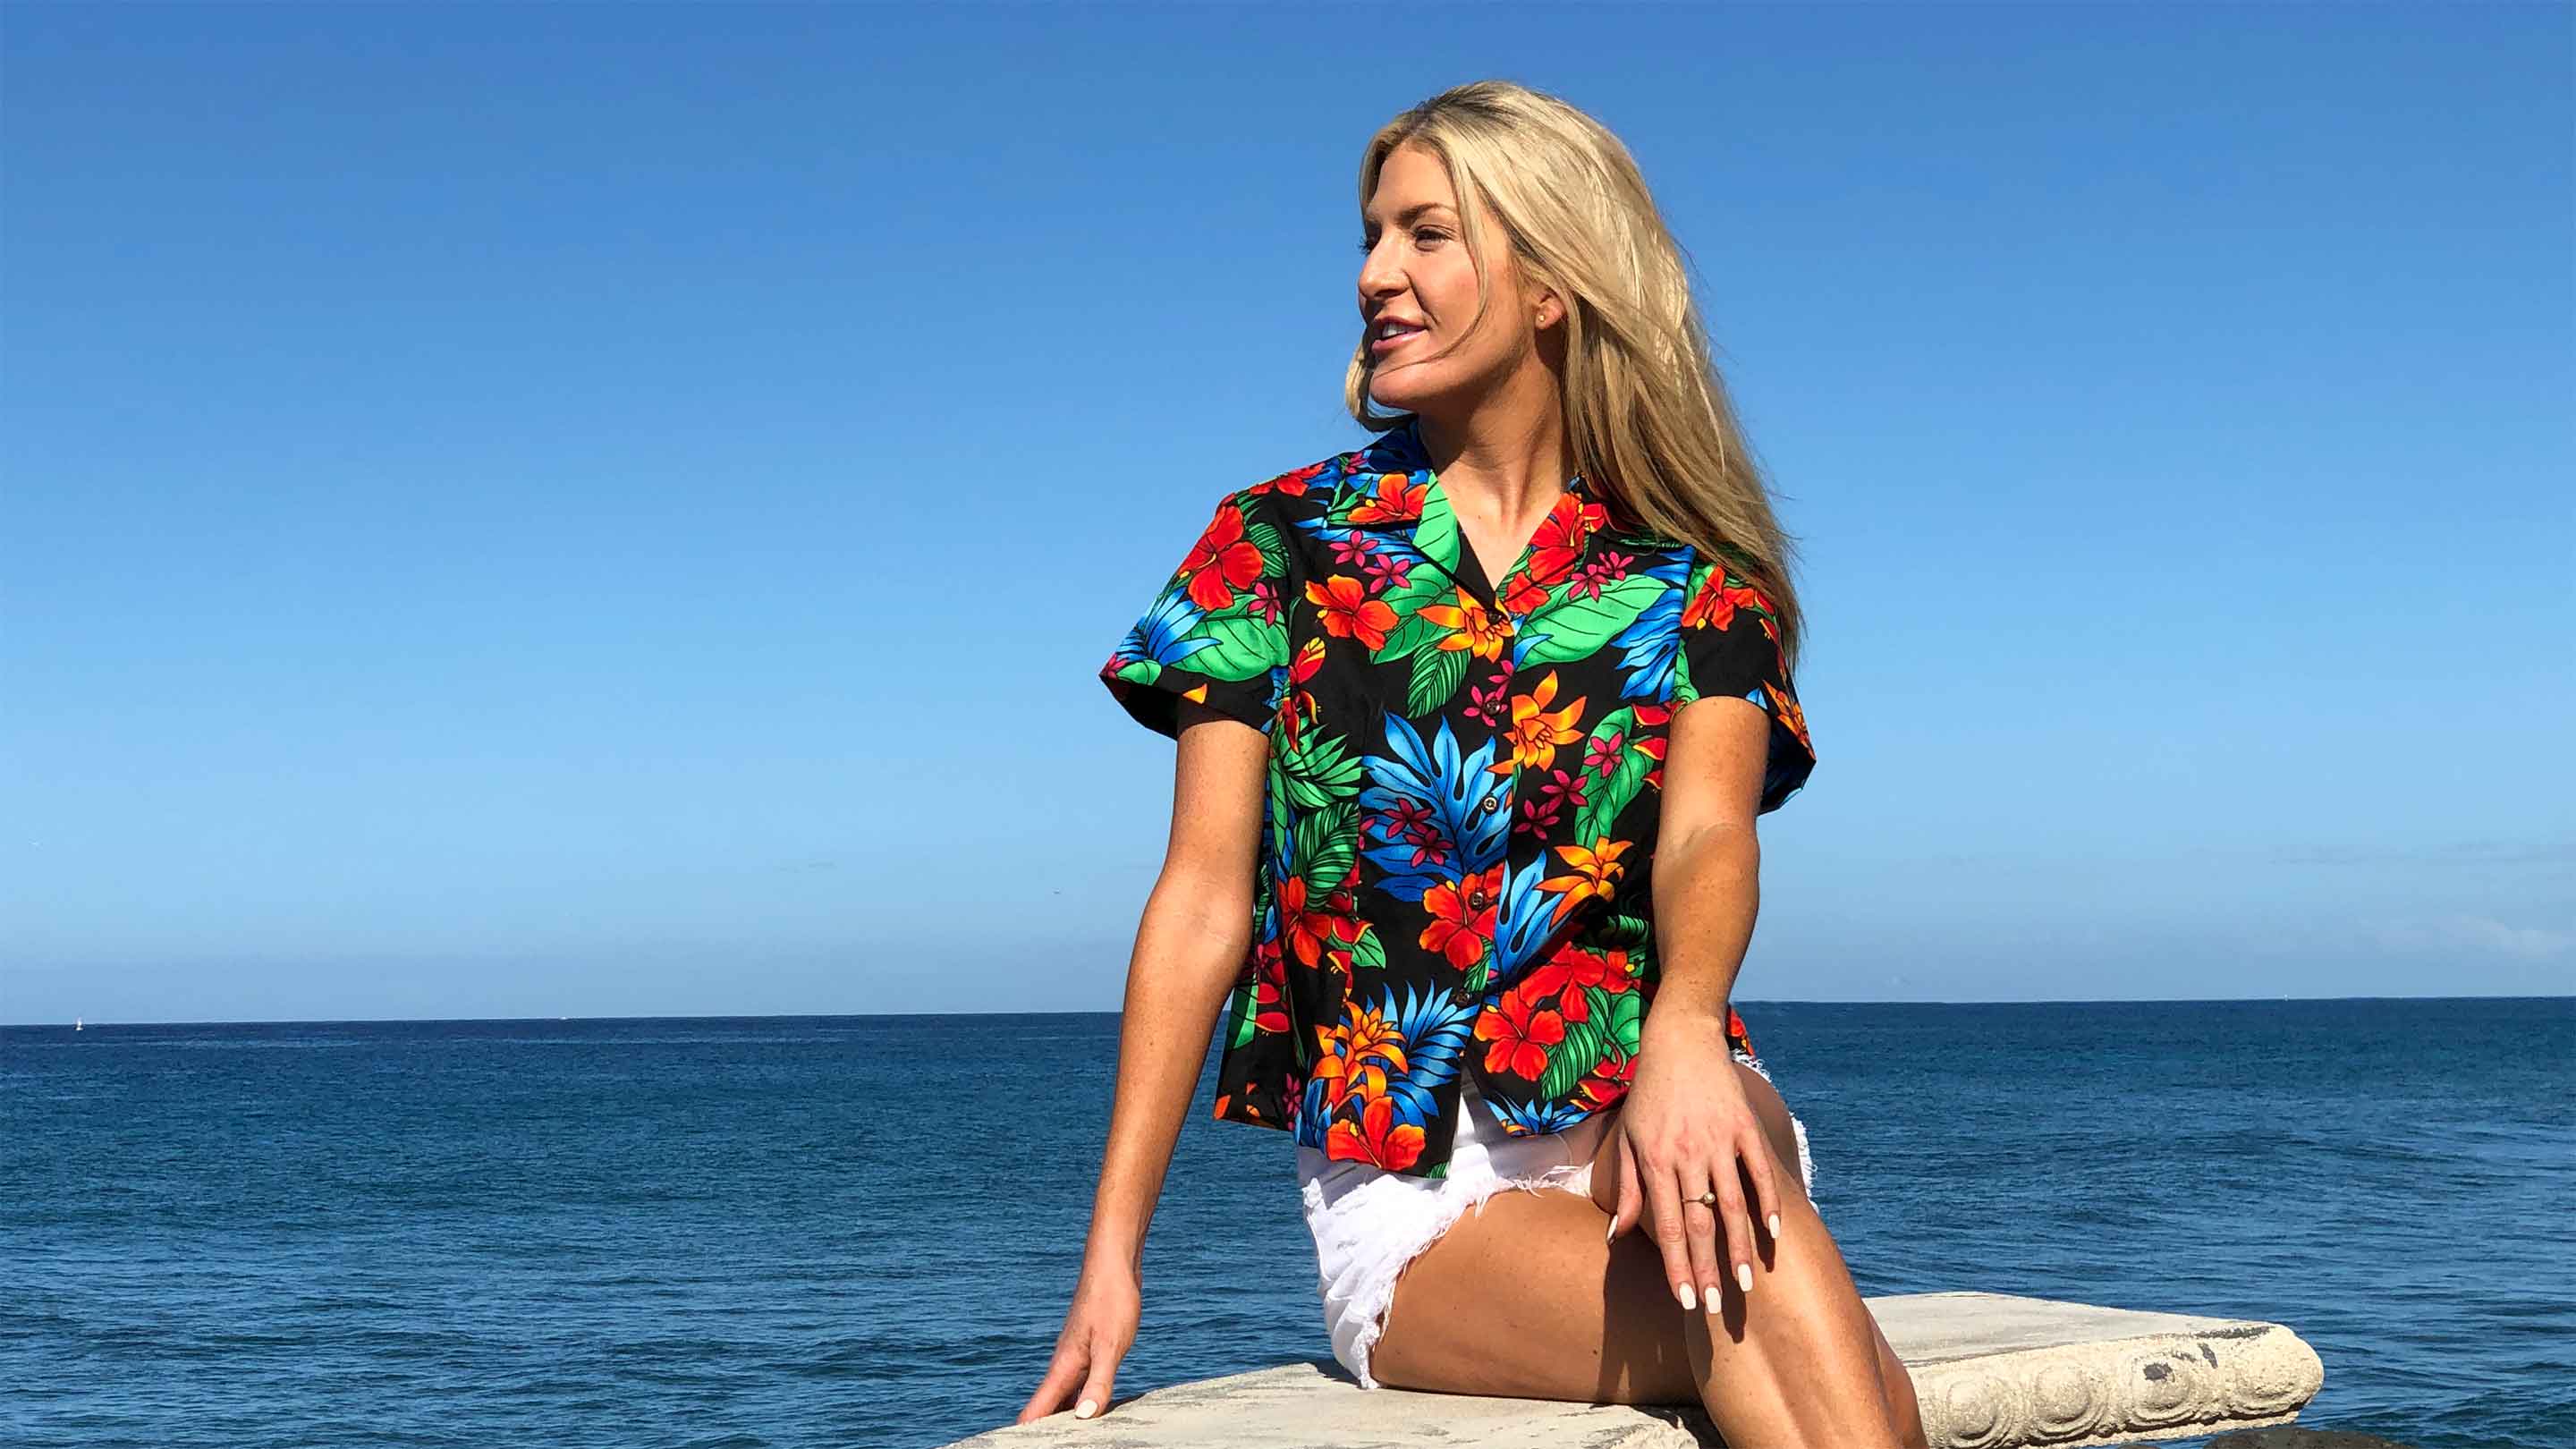 Pacific Legend Kilauea Navy Fitted Women's Hawaiian Shirt X-Small